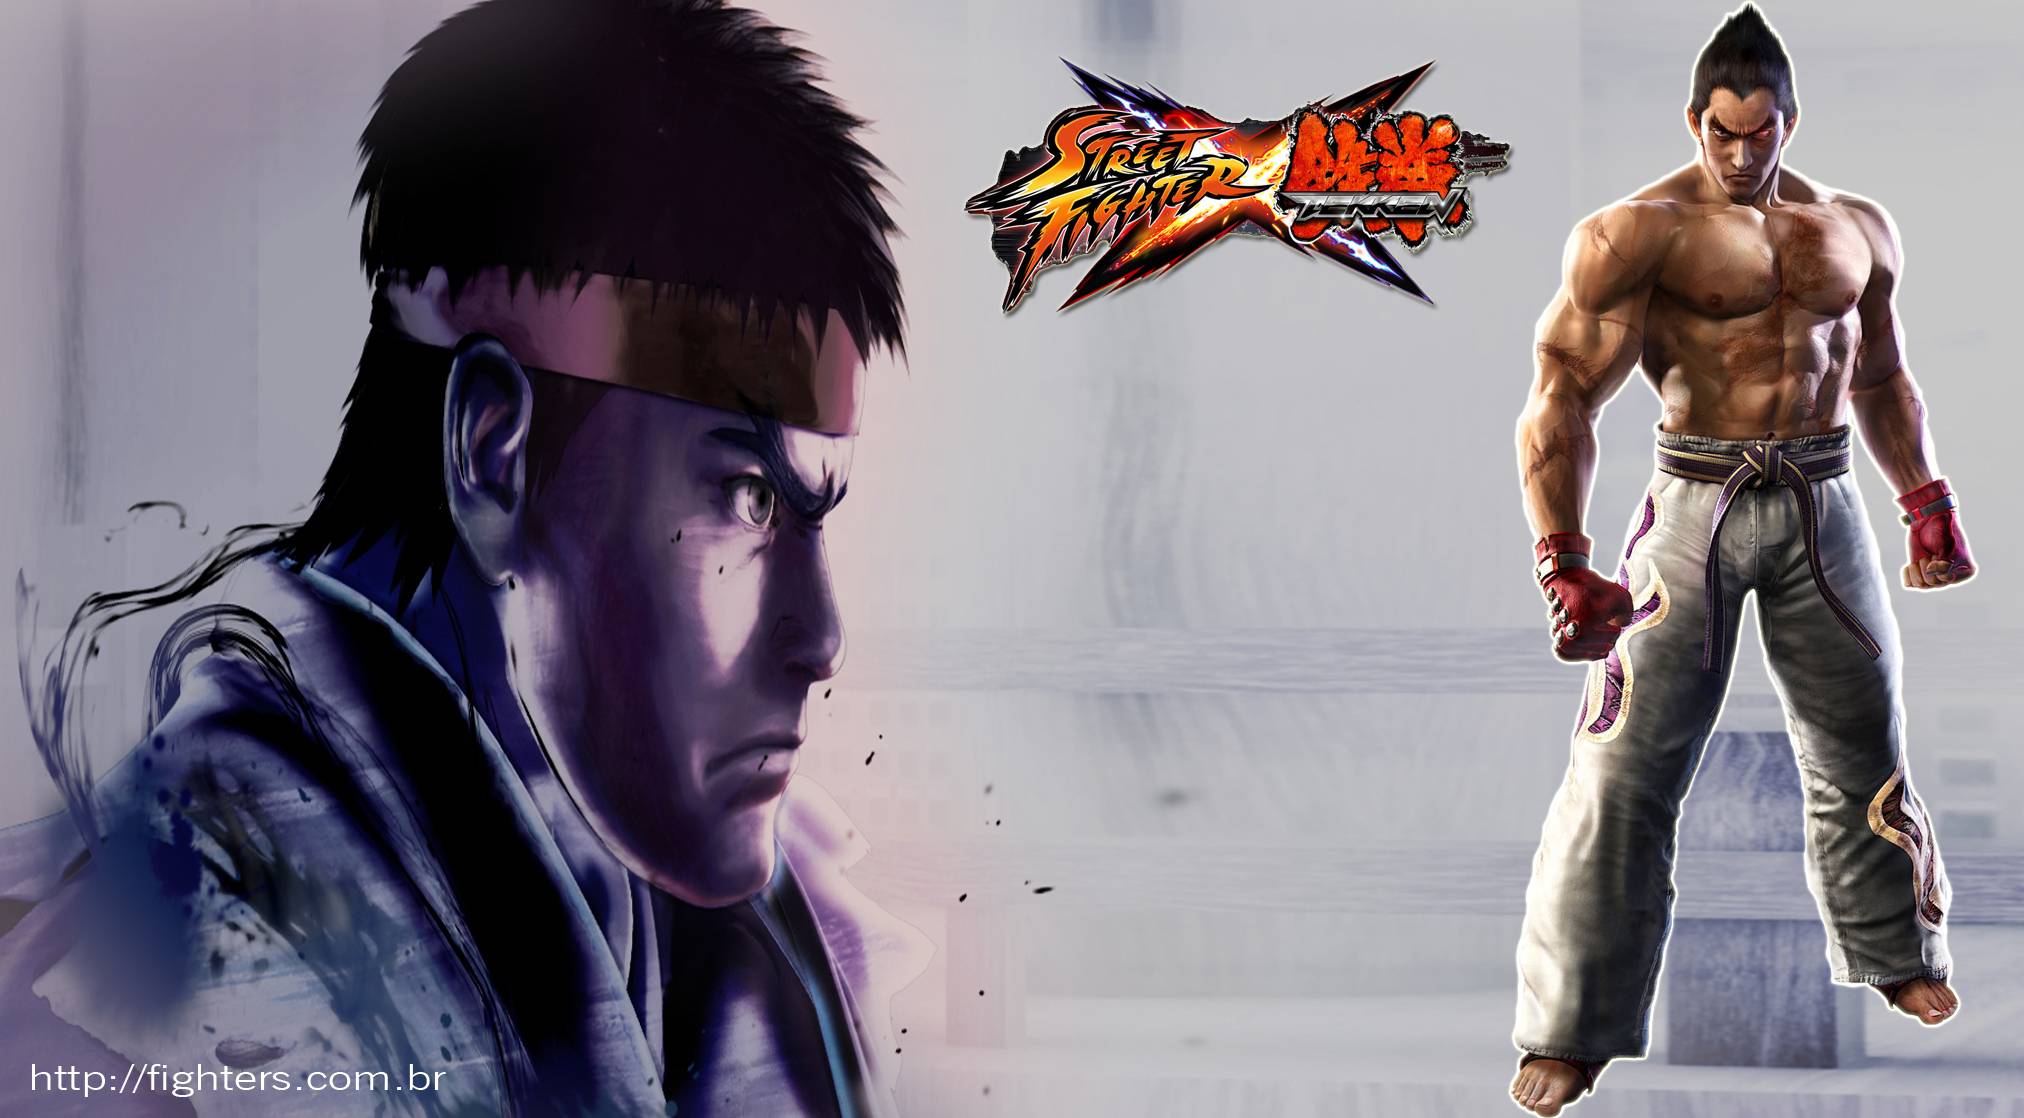 Street Fighter X Tekken Wallpapers in HD GamingBoltcom Video Game